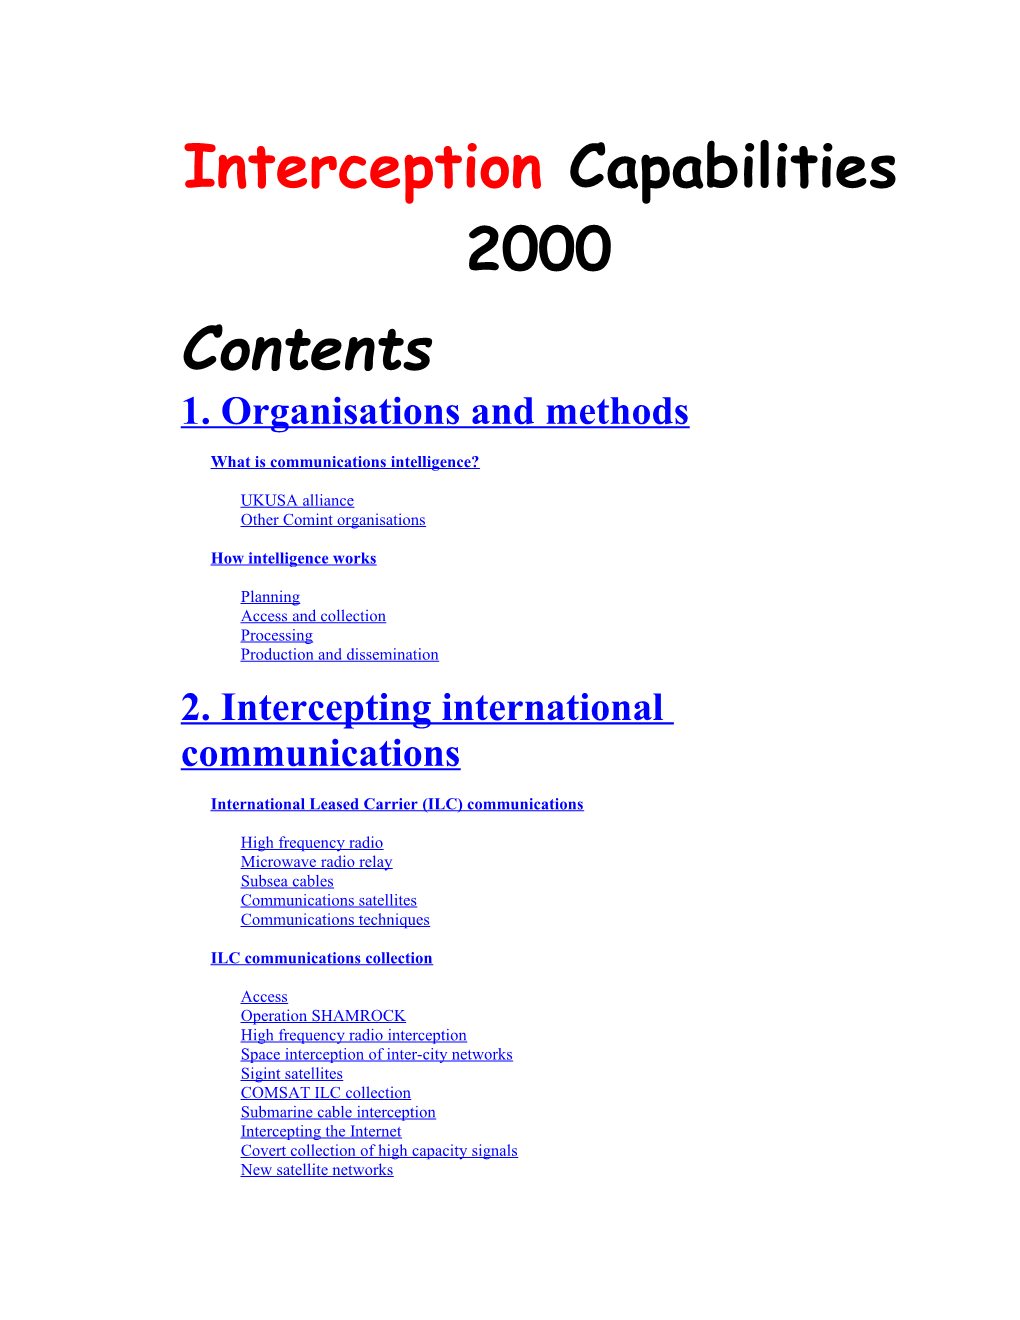 Interception Capabilities 2000